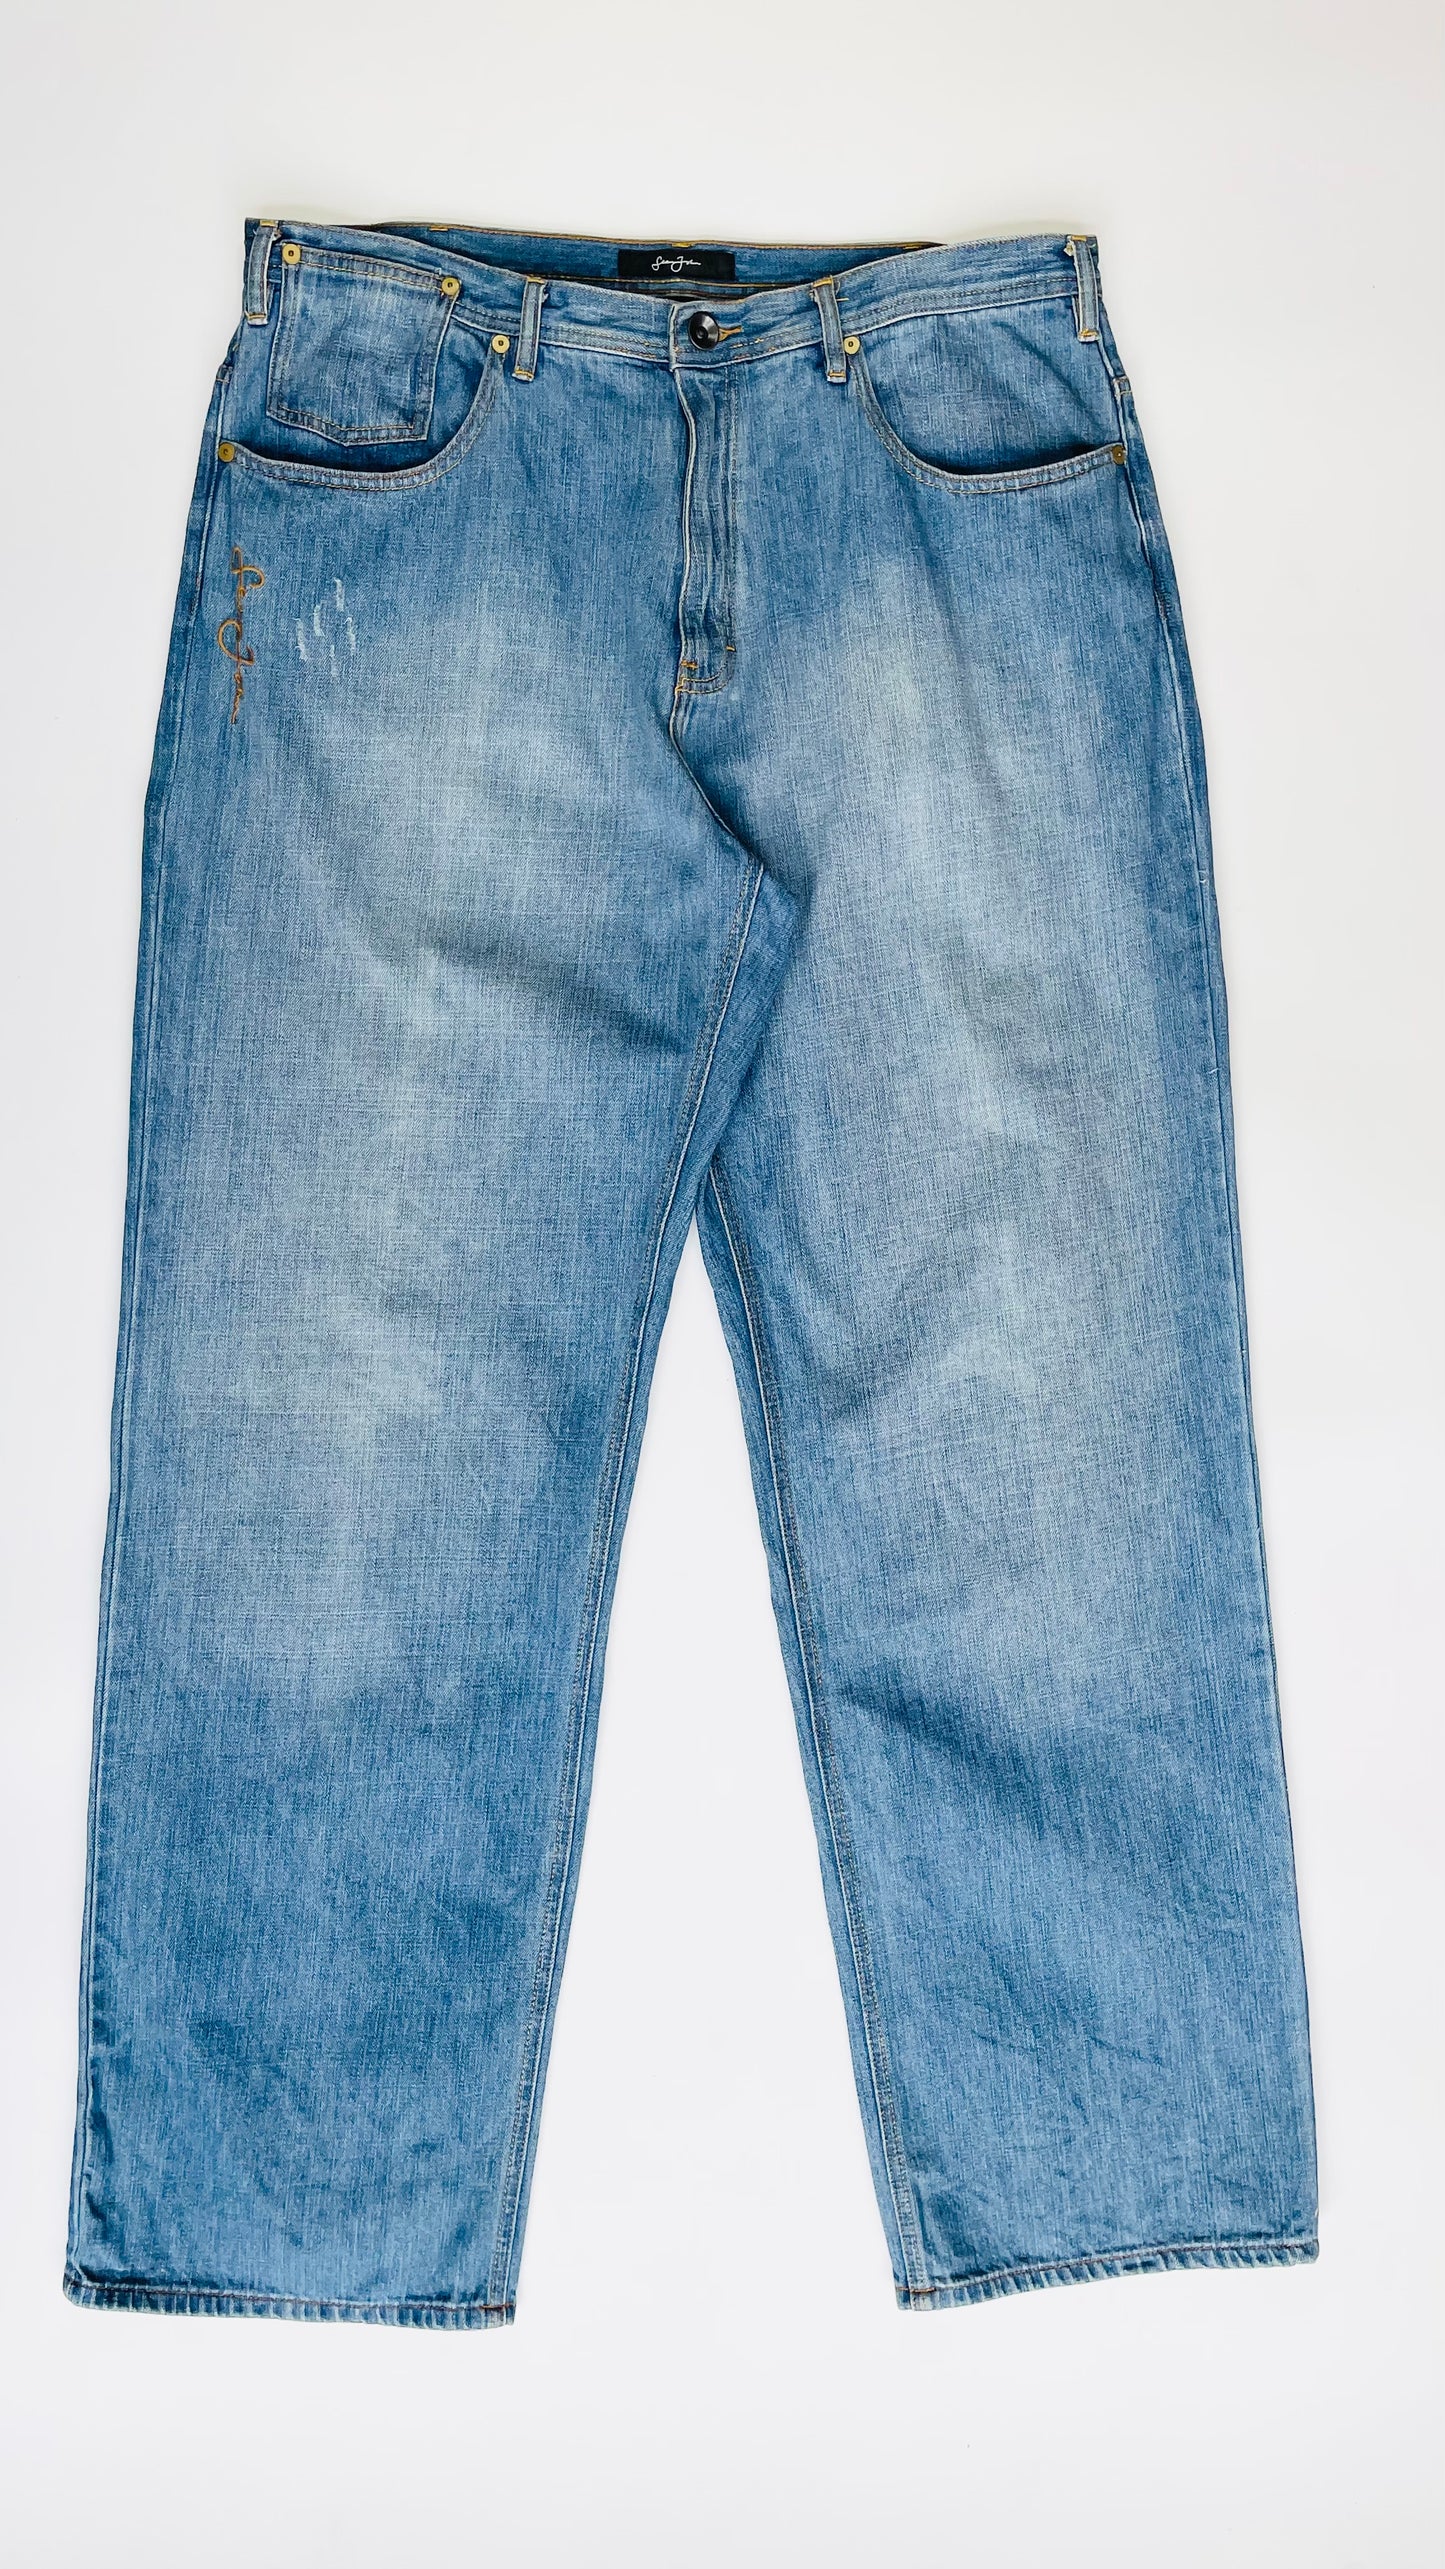 90s Sean John mid blue jeans - Size 38